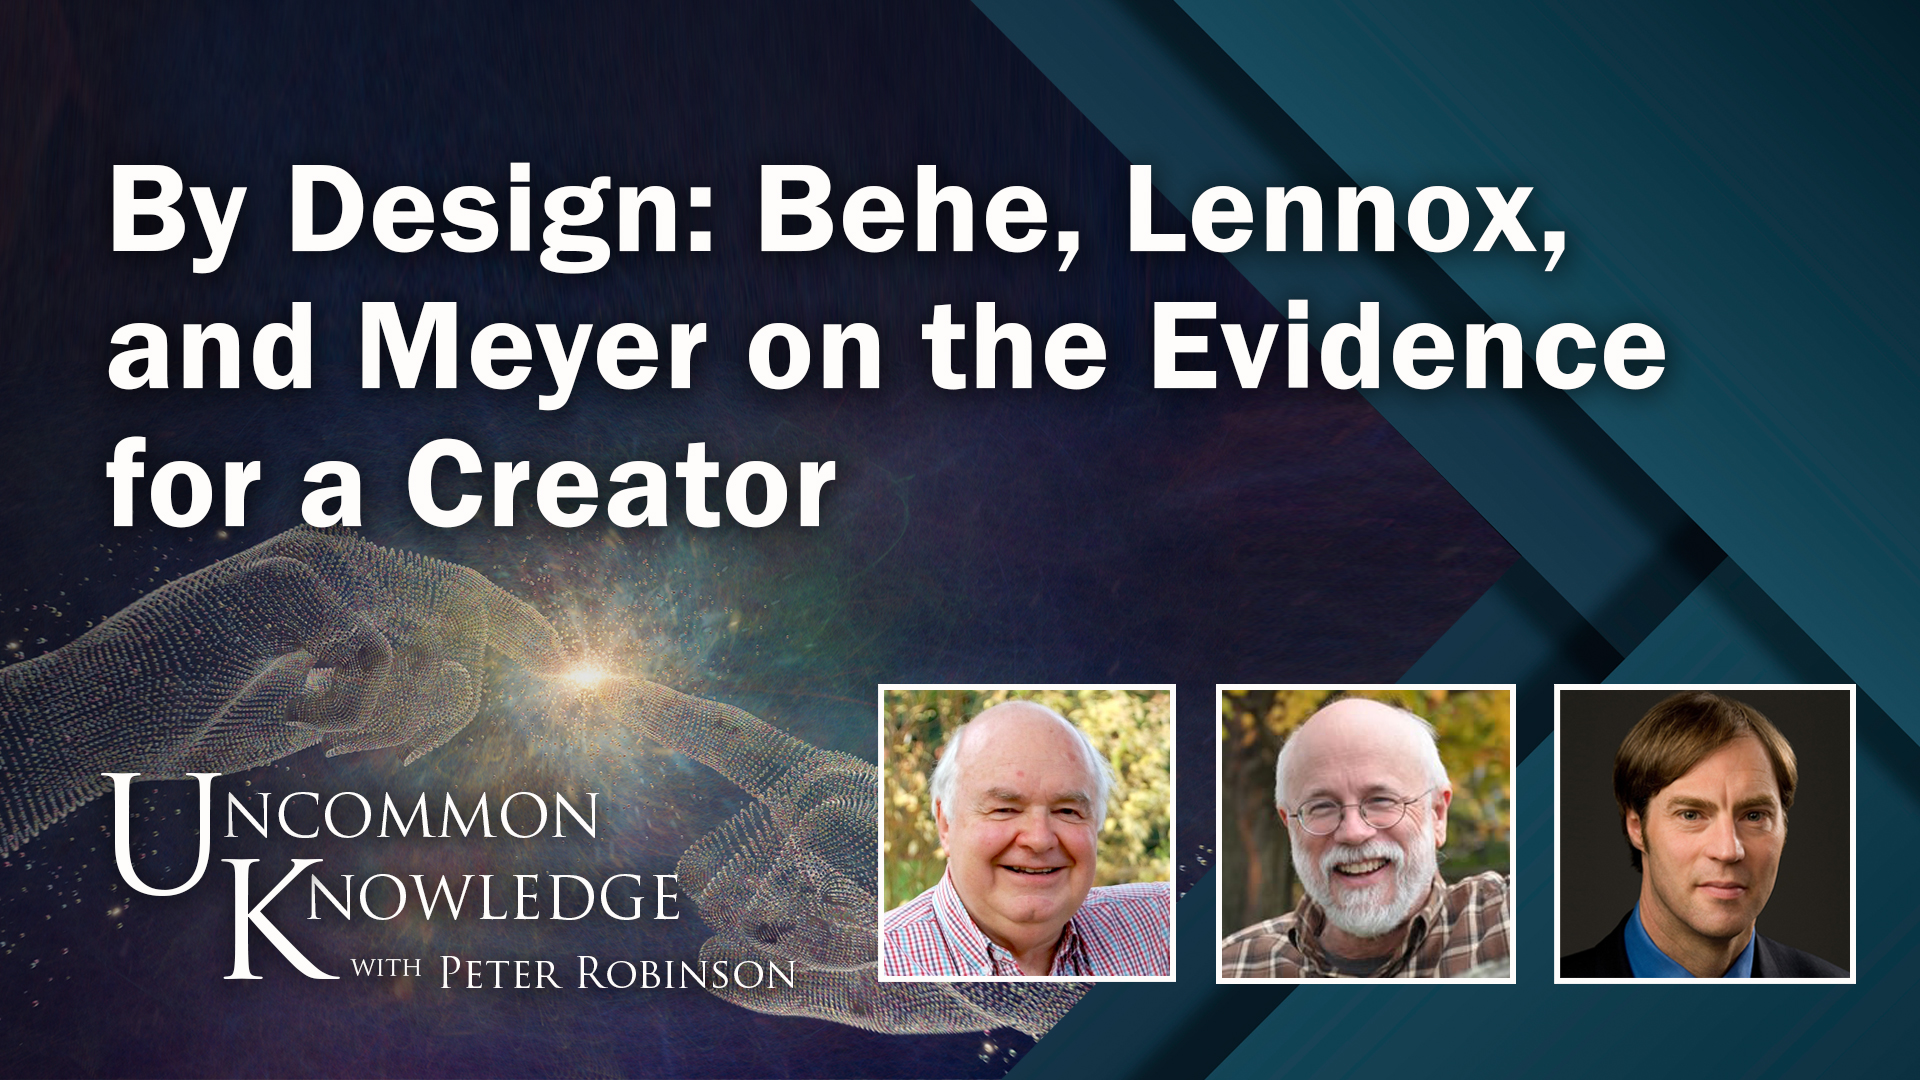 UK: By Design: Behe, Lennox, and Meyer